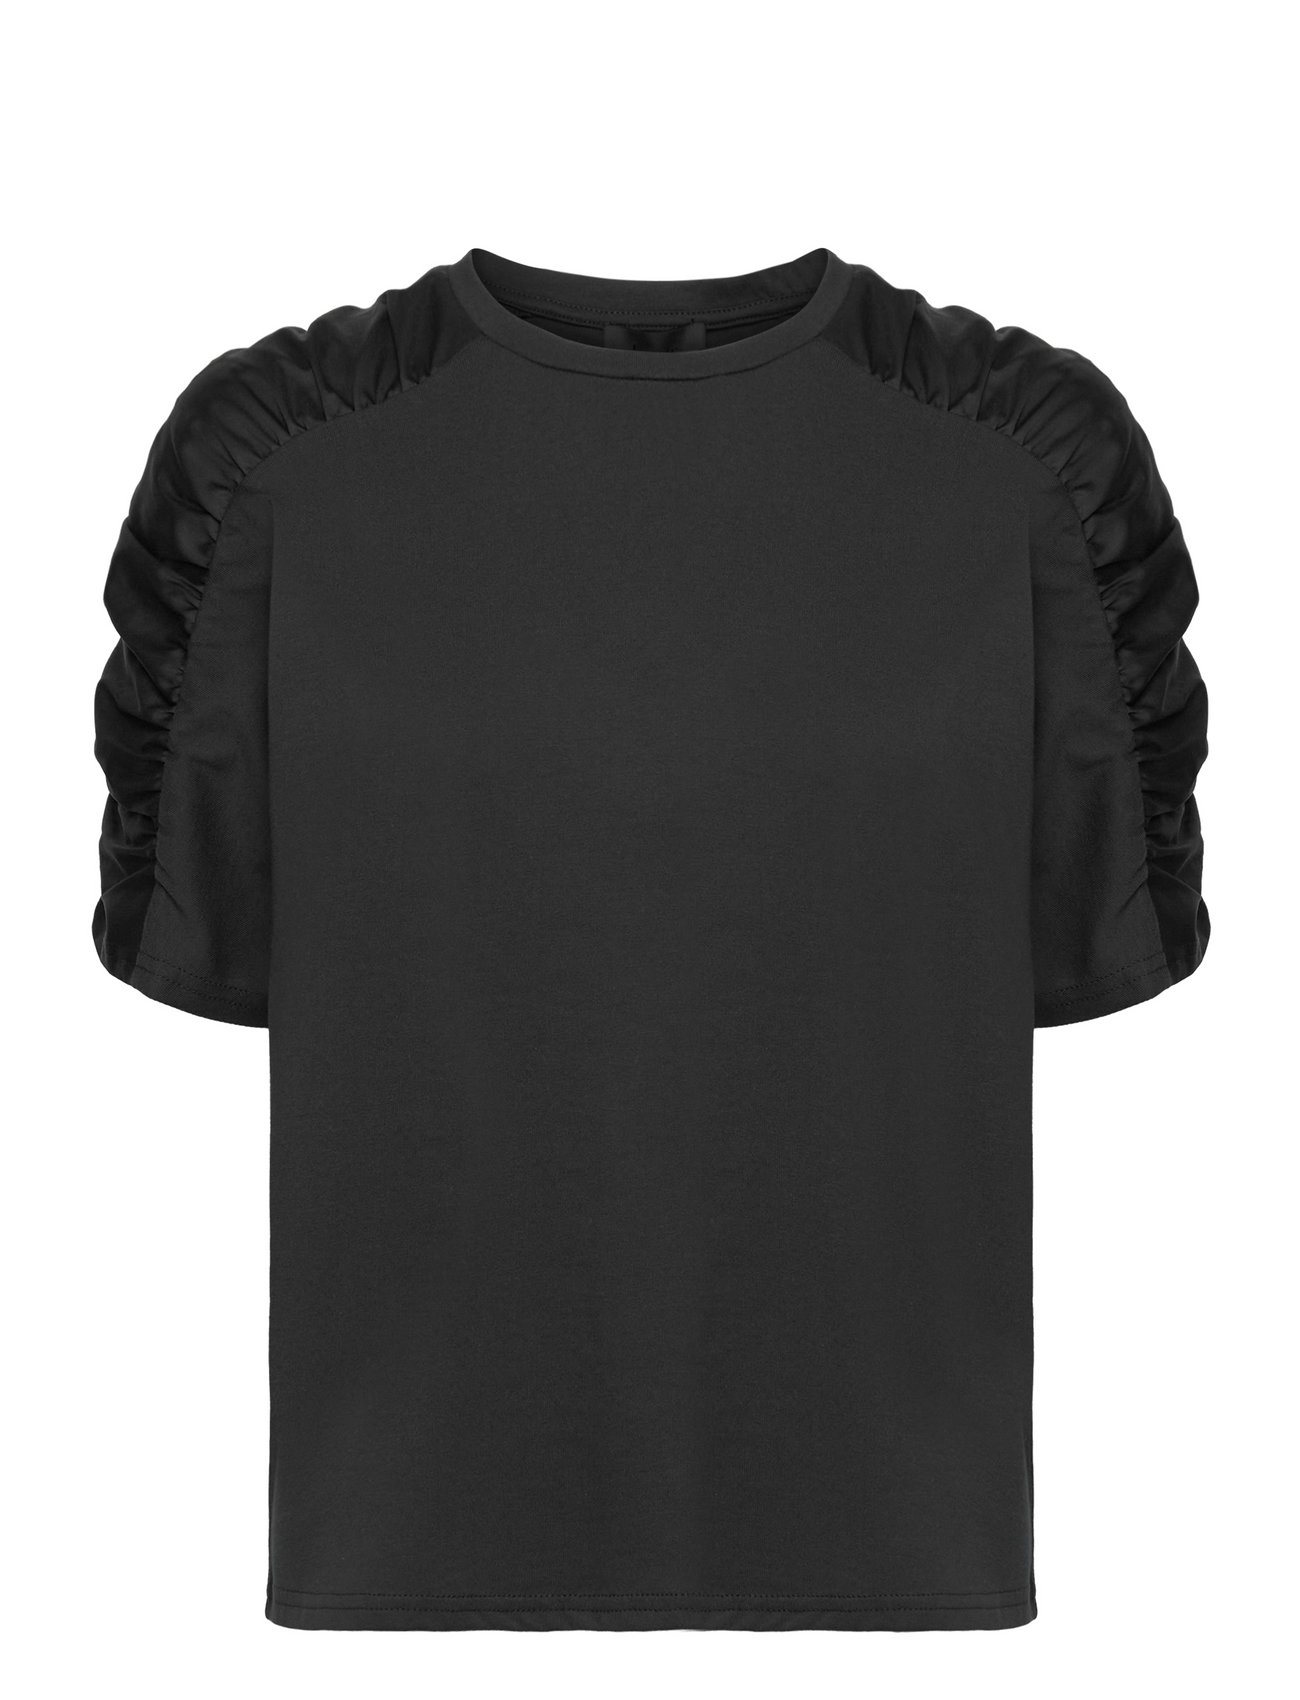 Lr-Kowa Tops T-shirts & Tops Short-sleeved Navy Levete Room